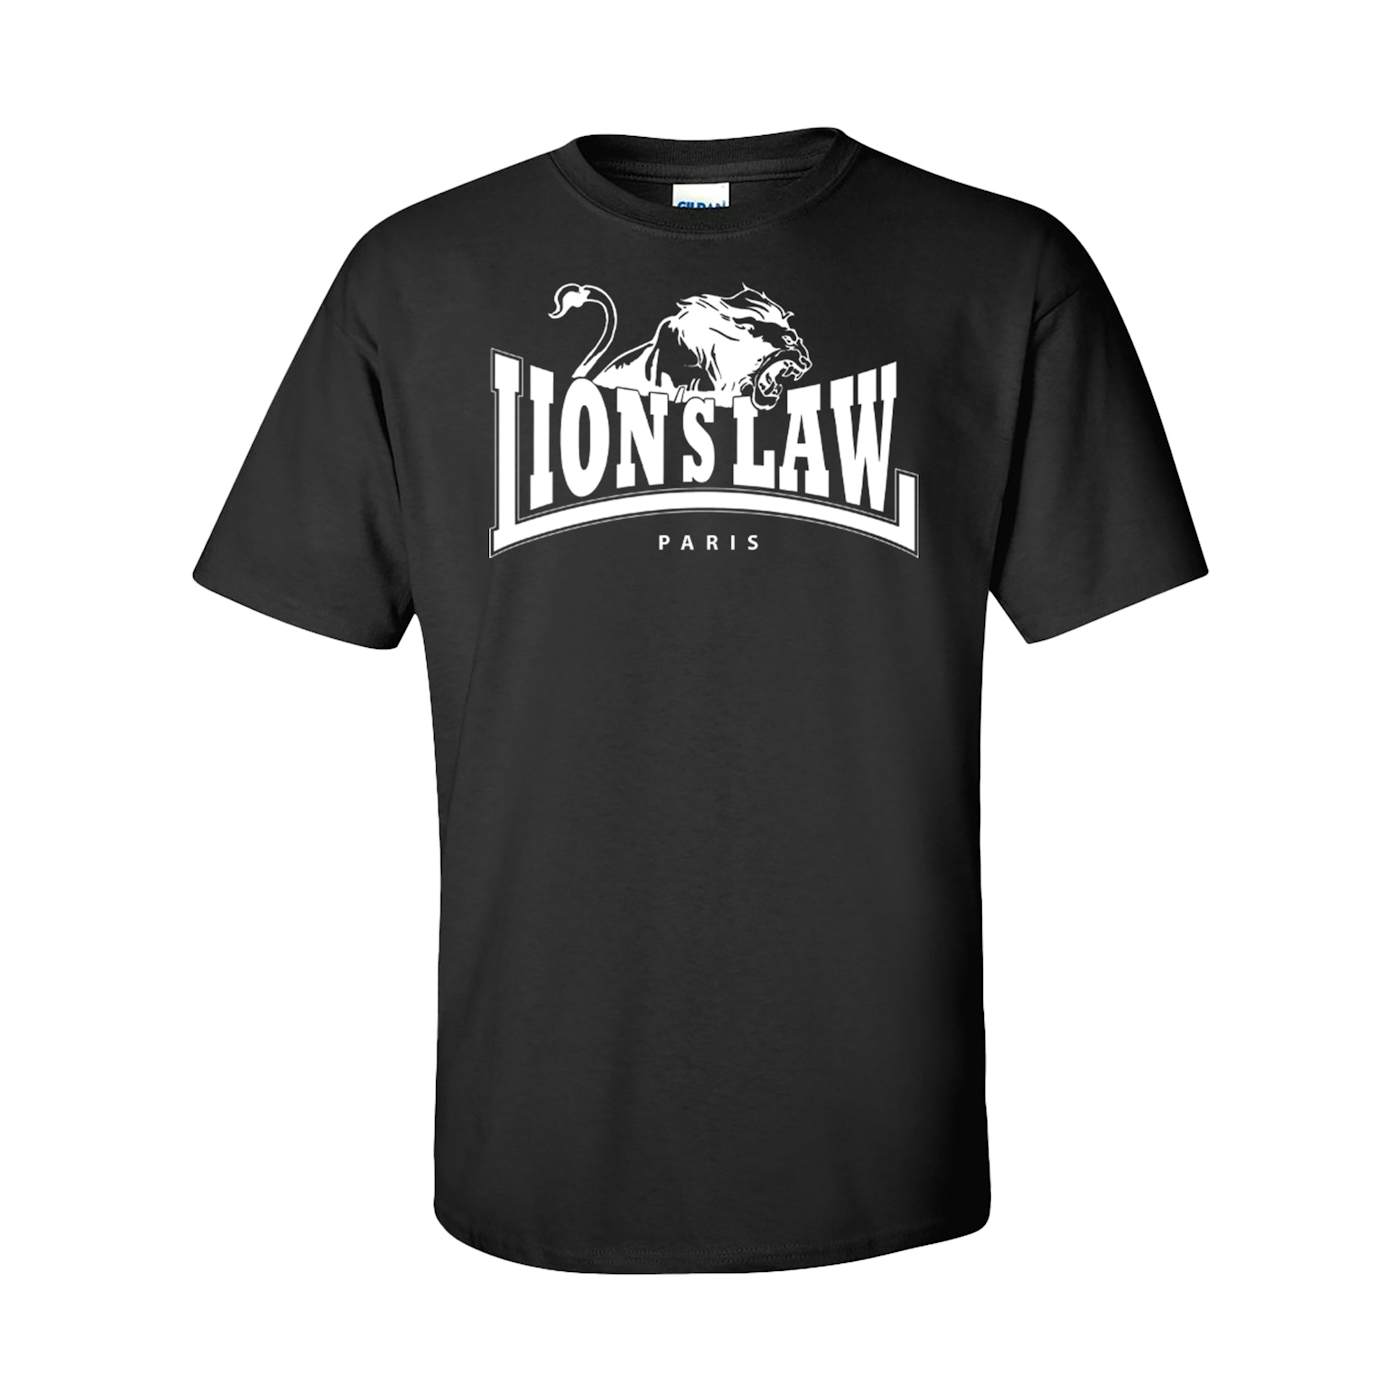 Lion's Law - Paris Logo - White on Black - T-Shirt